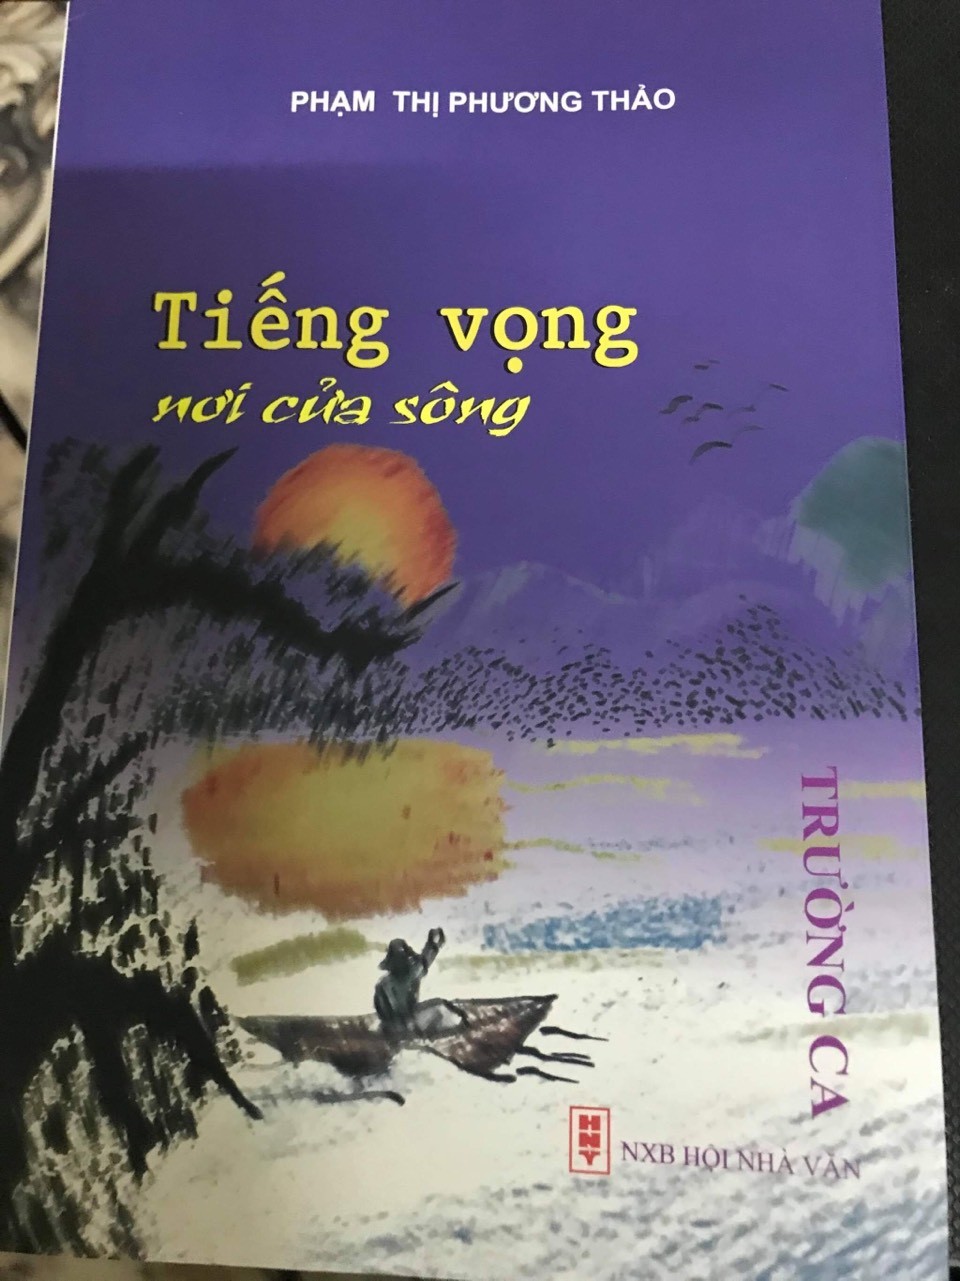 phuong-thao-lung-ngua2-1641439026.jpg